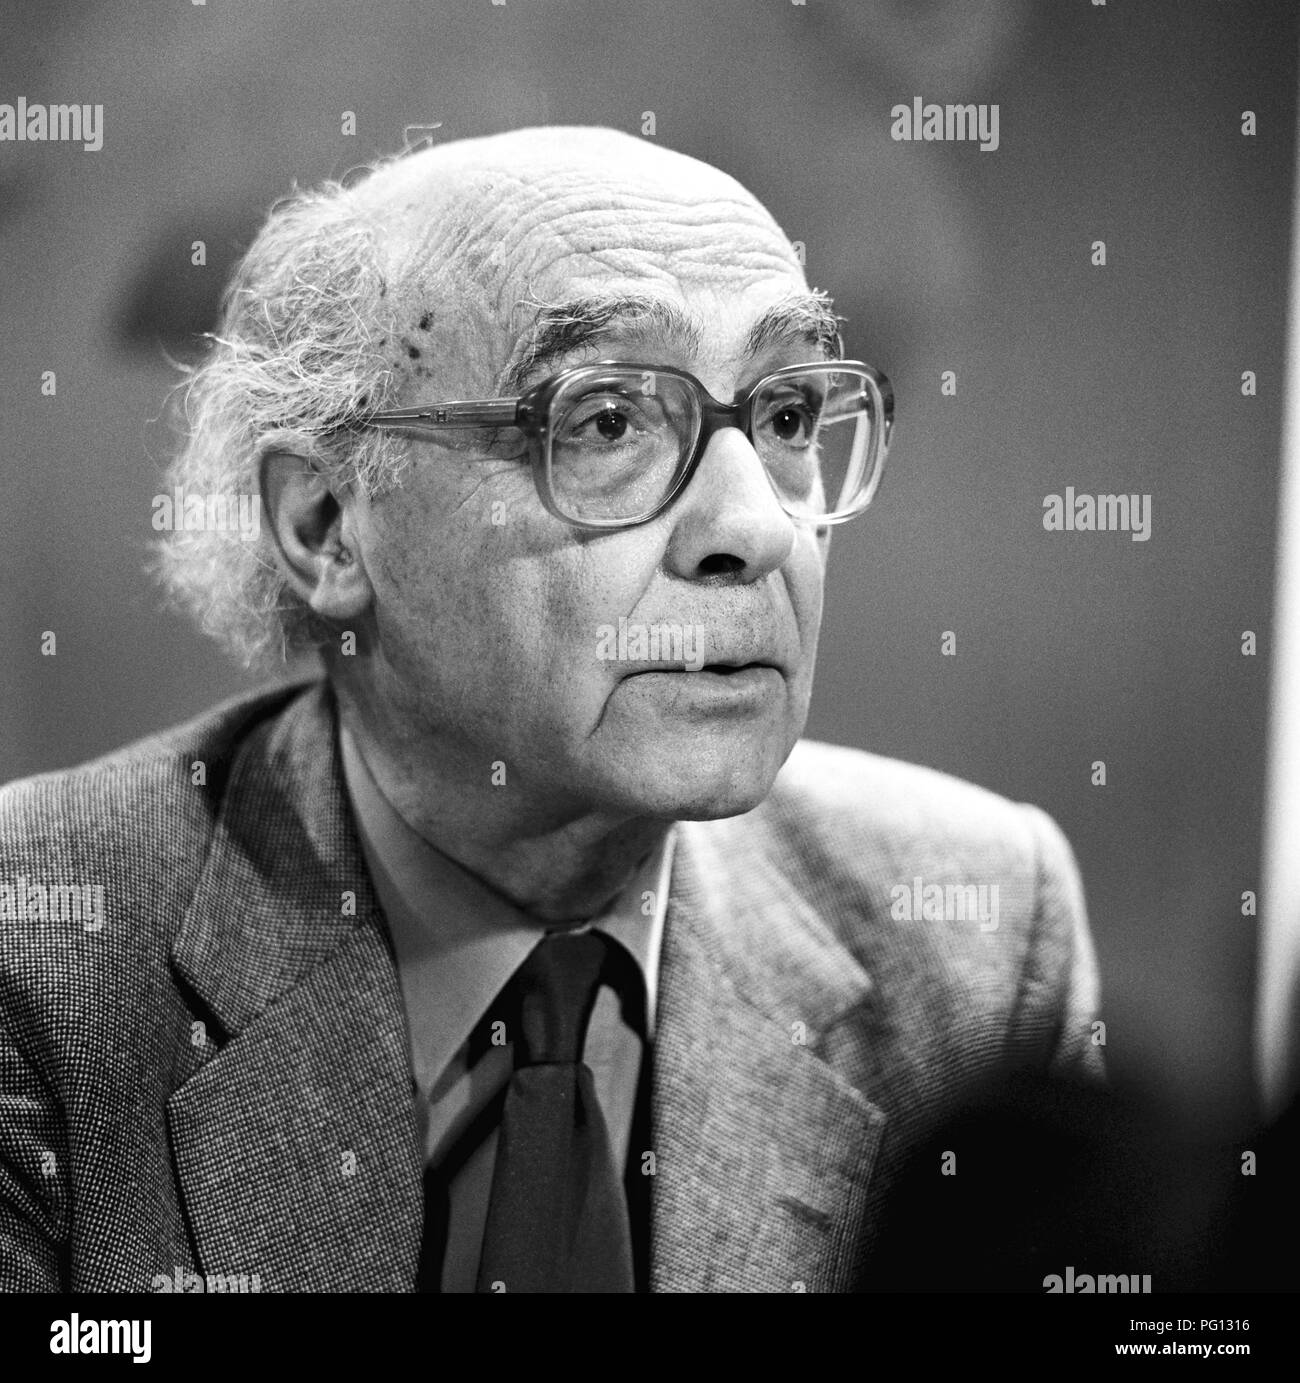 Jose Saramago, writer - Portugal Stock Photo - Alamy